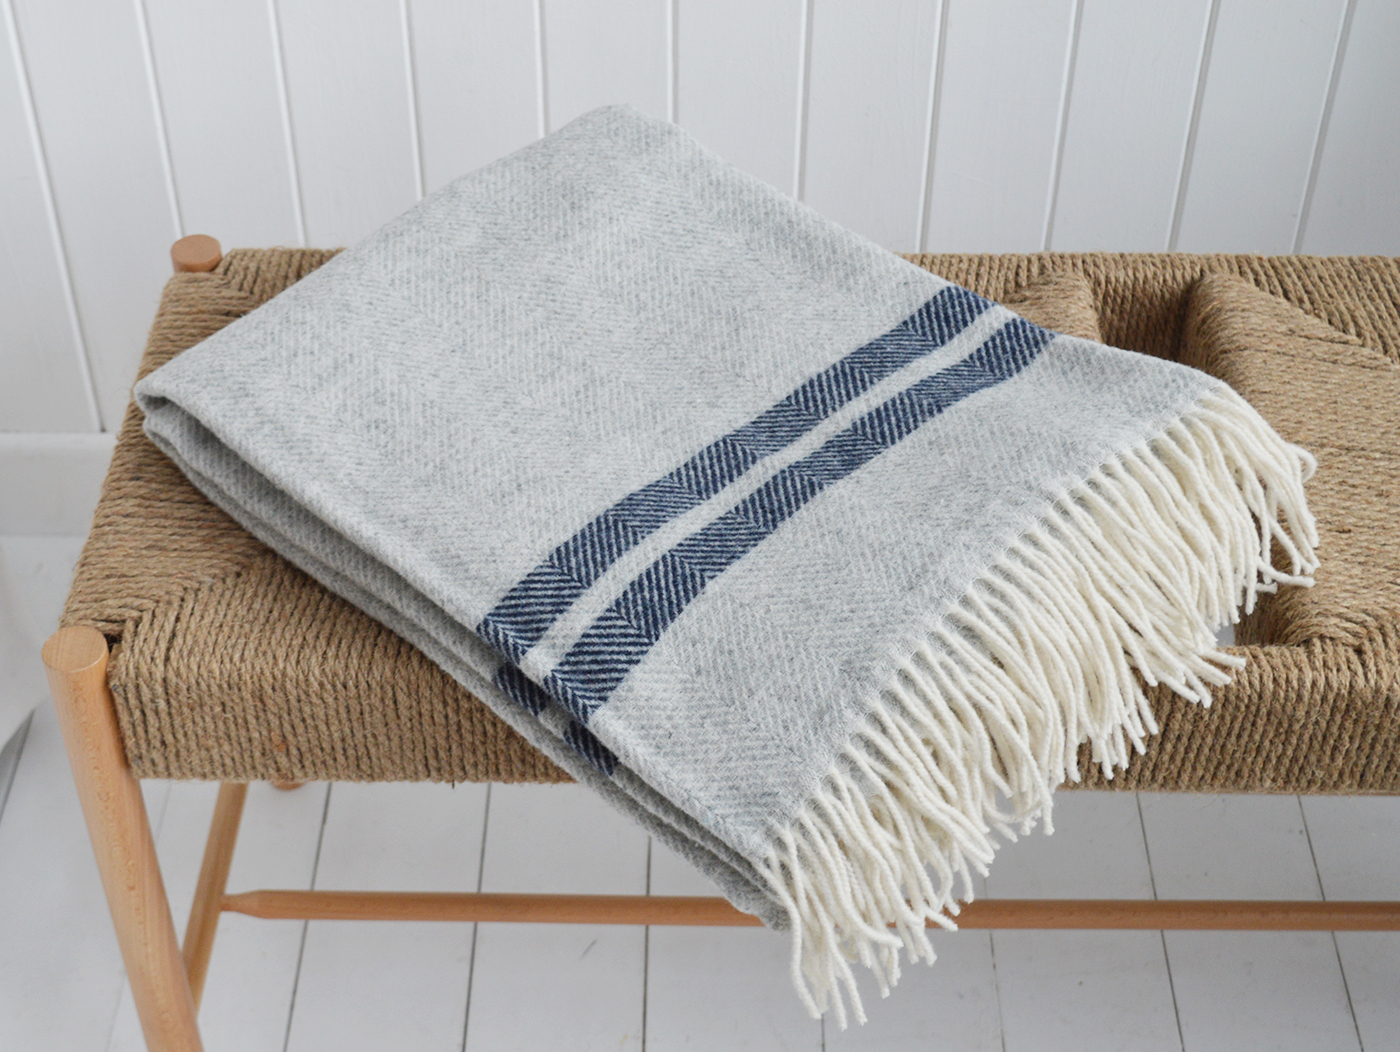 Sudbury blue and grey wool throws - New England Coastal Interiors and Furniture